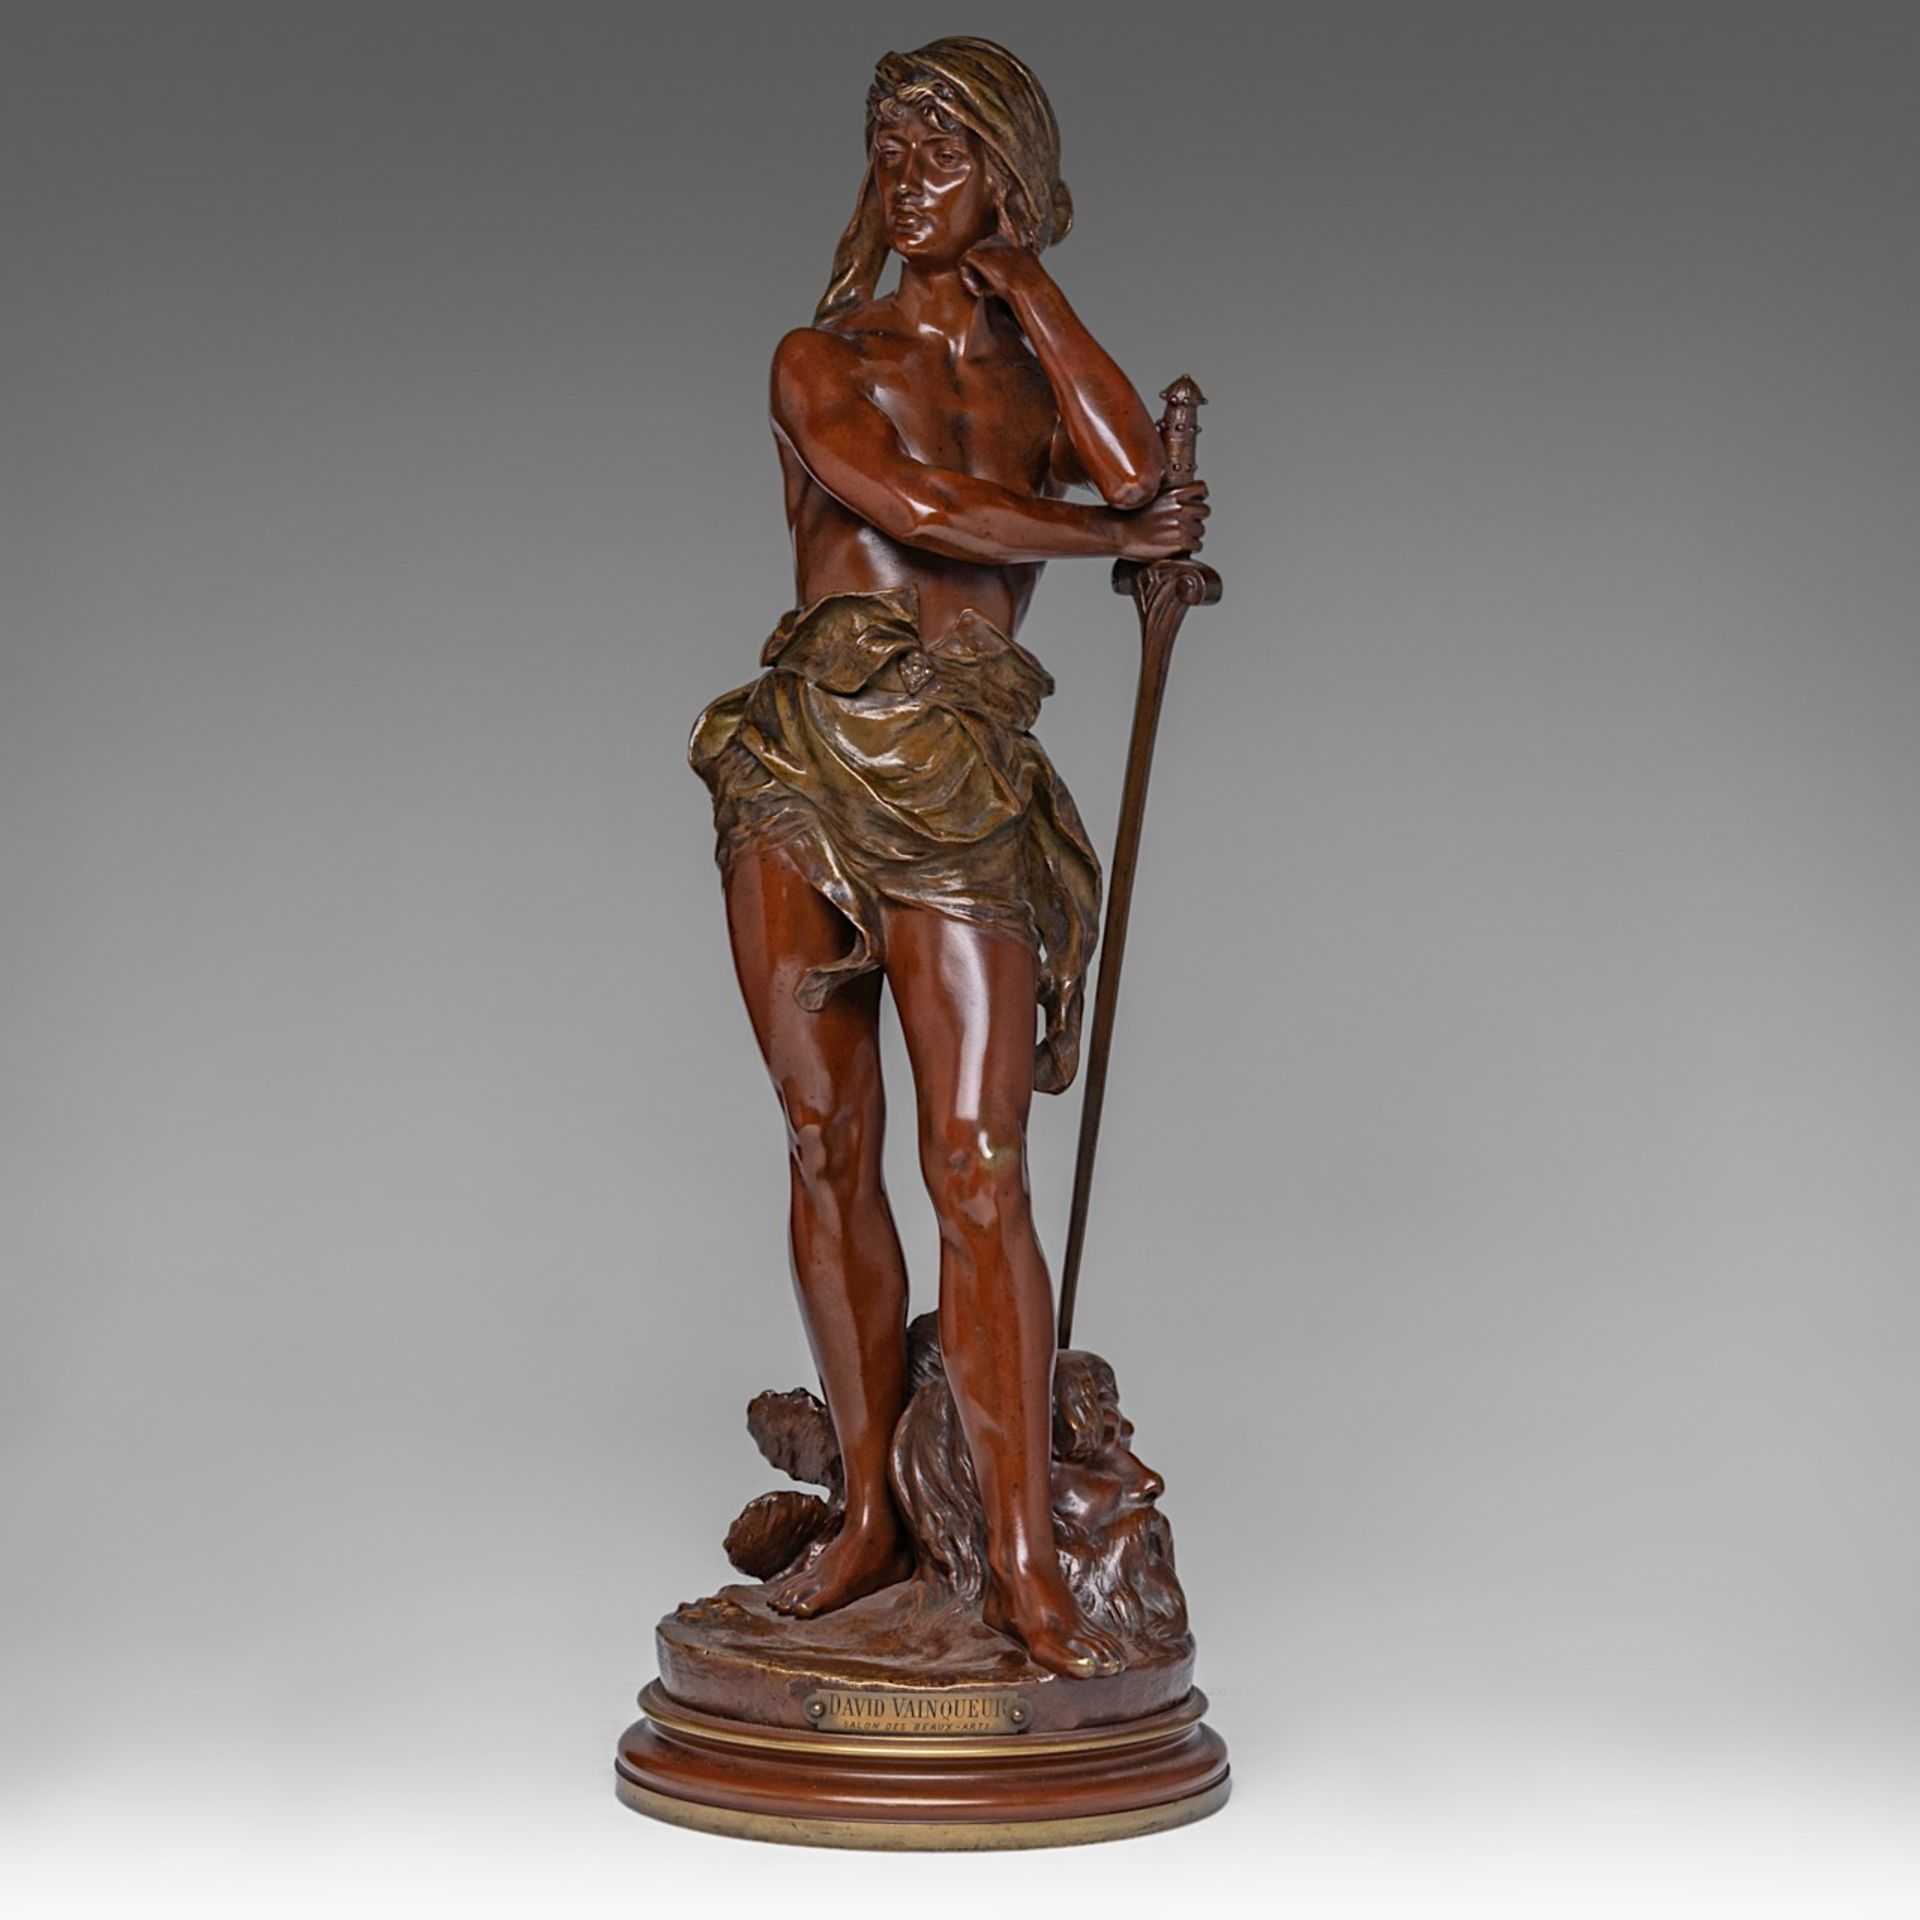 Henri Honore Ple (1853-1922), 'David Vainqueur', patinated bronze, H 61 cm